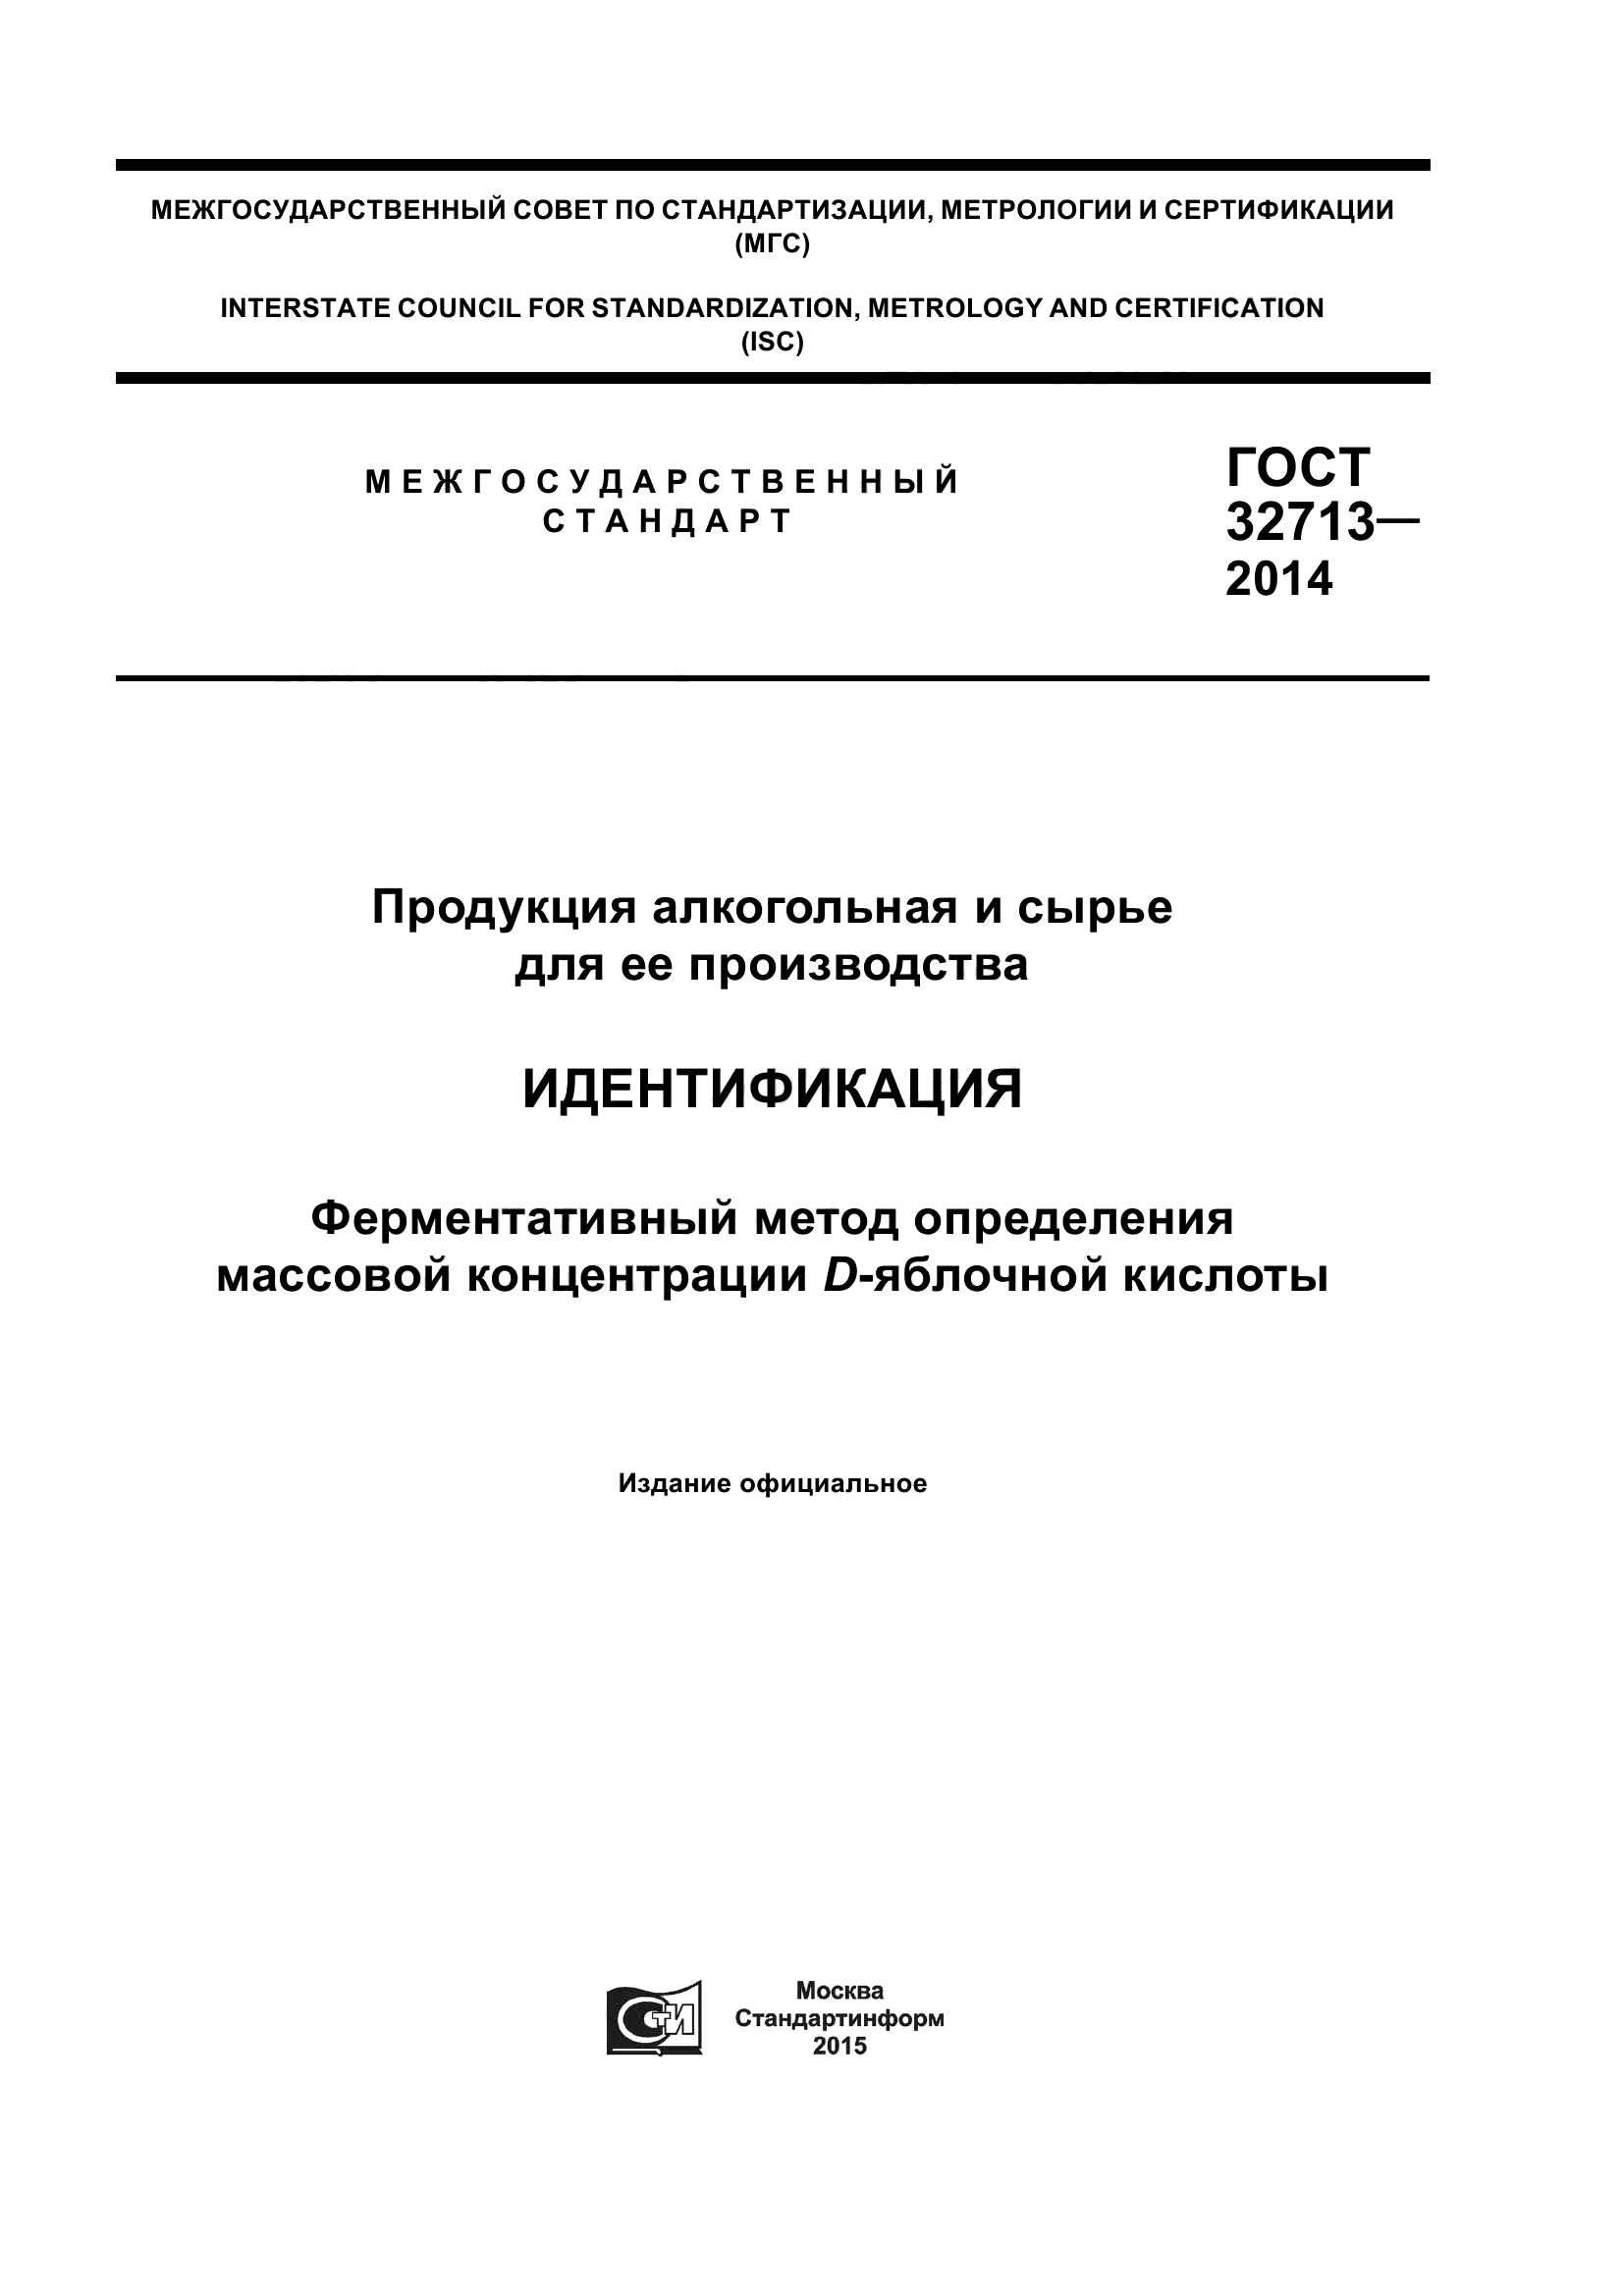 ГОСТ 32713-2014